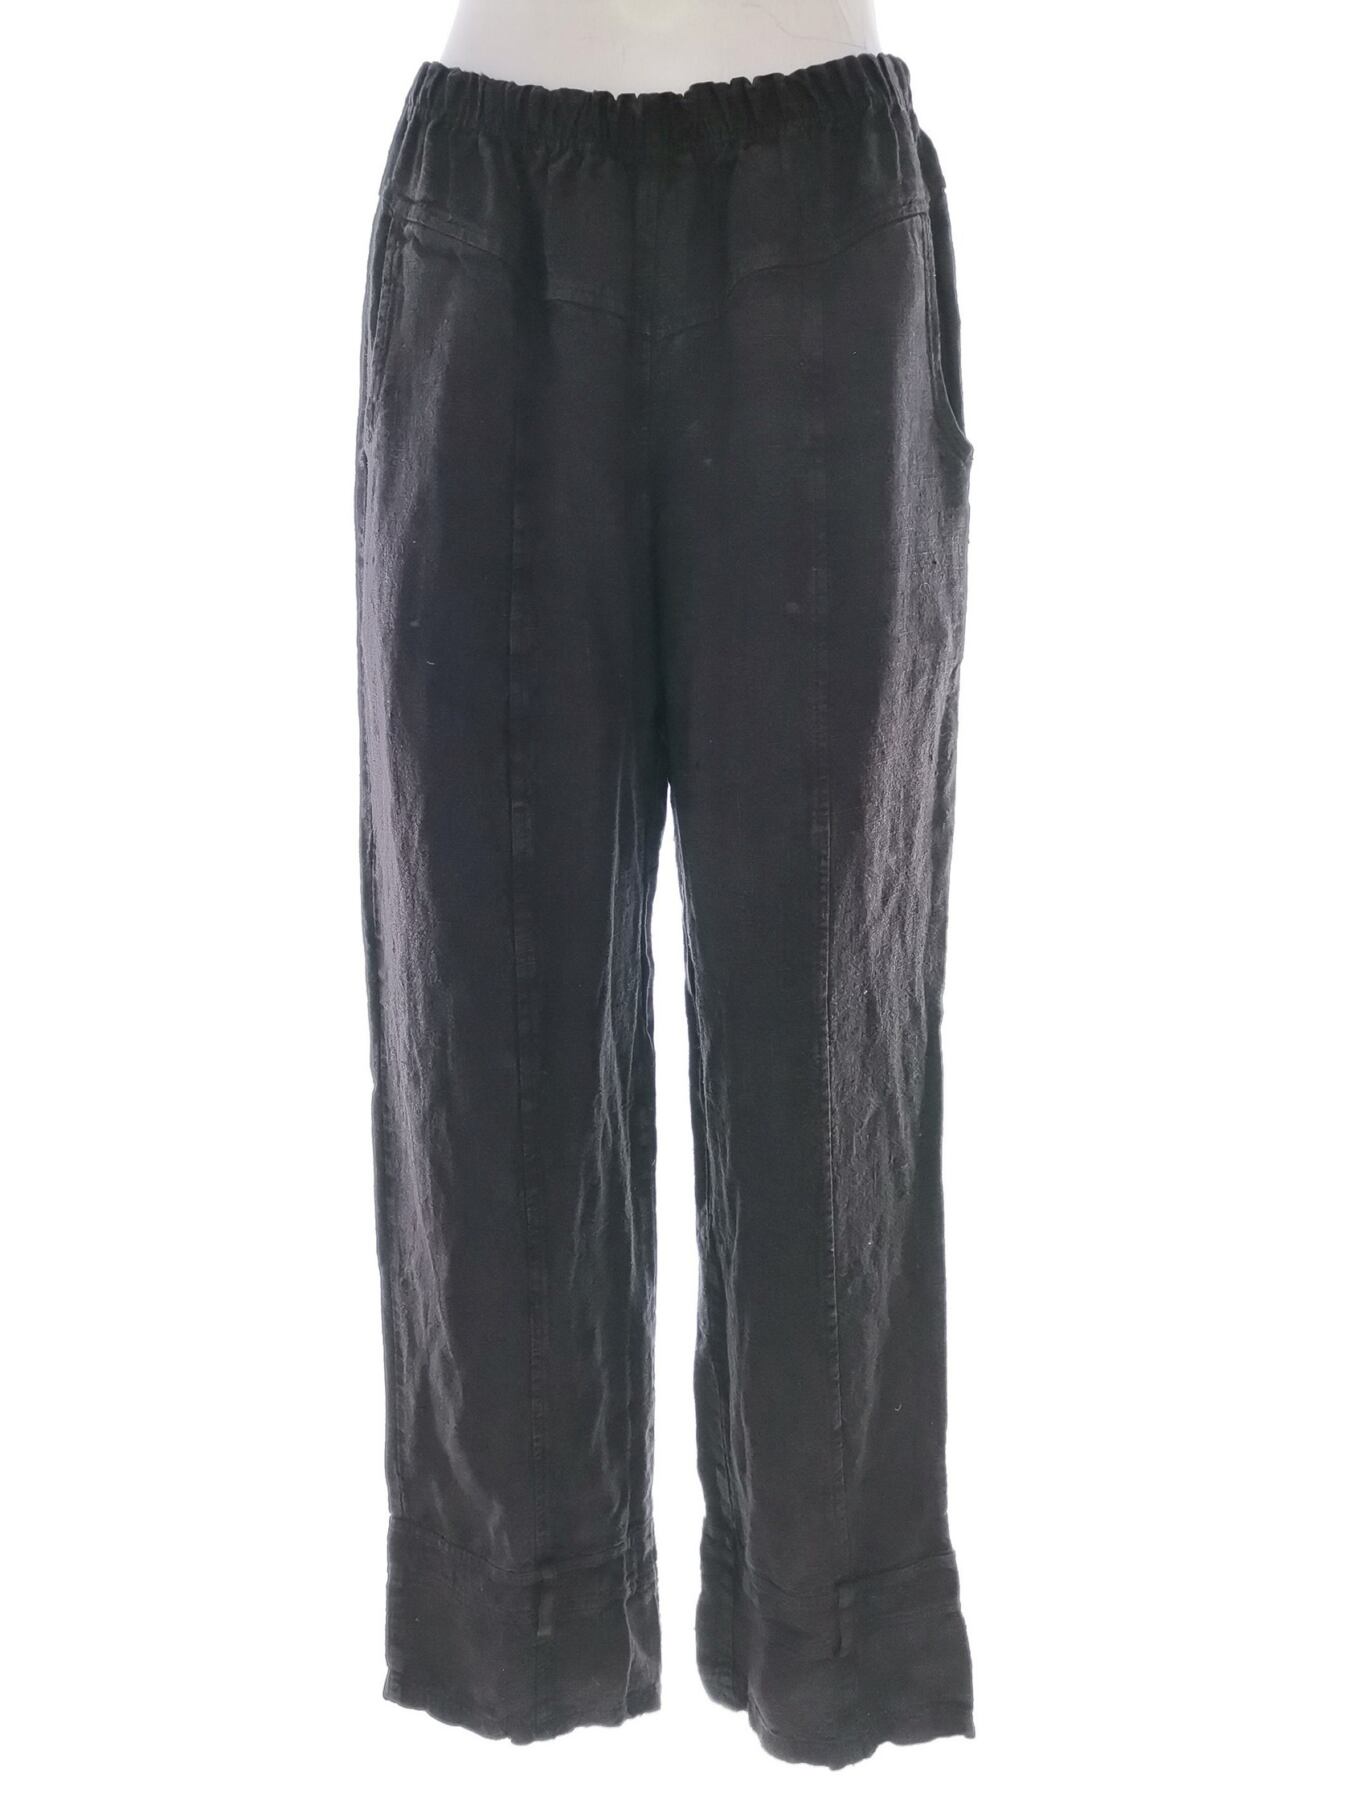 Uno Rozmiar 1 (38) Kolor Czarny Spodnie Casual Materiał Len 100%